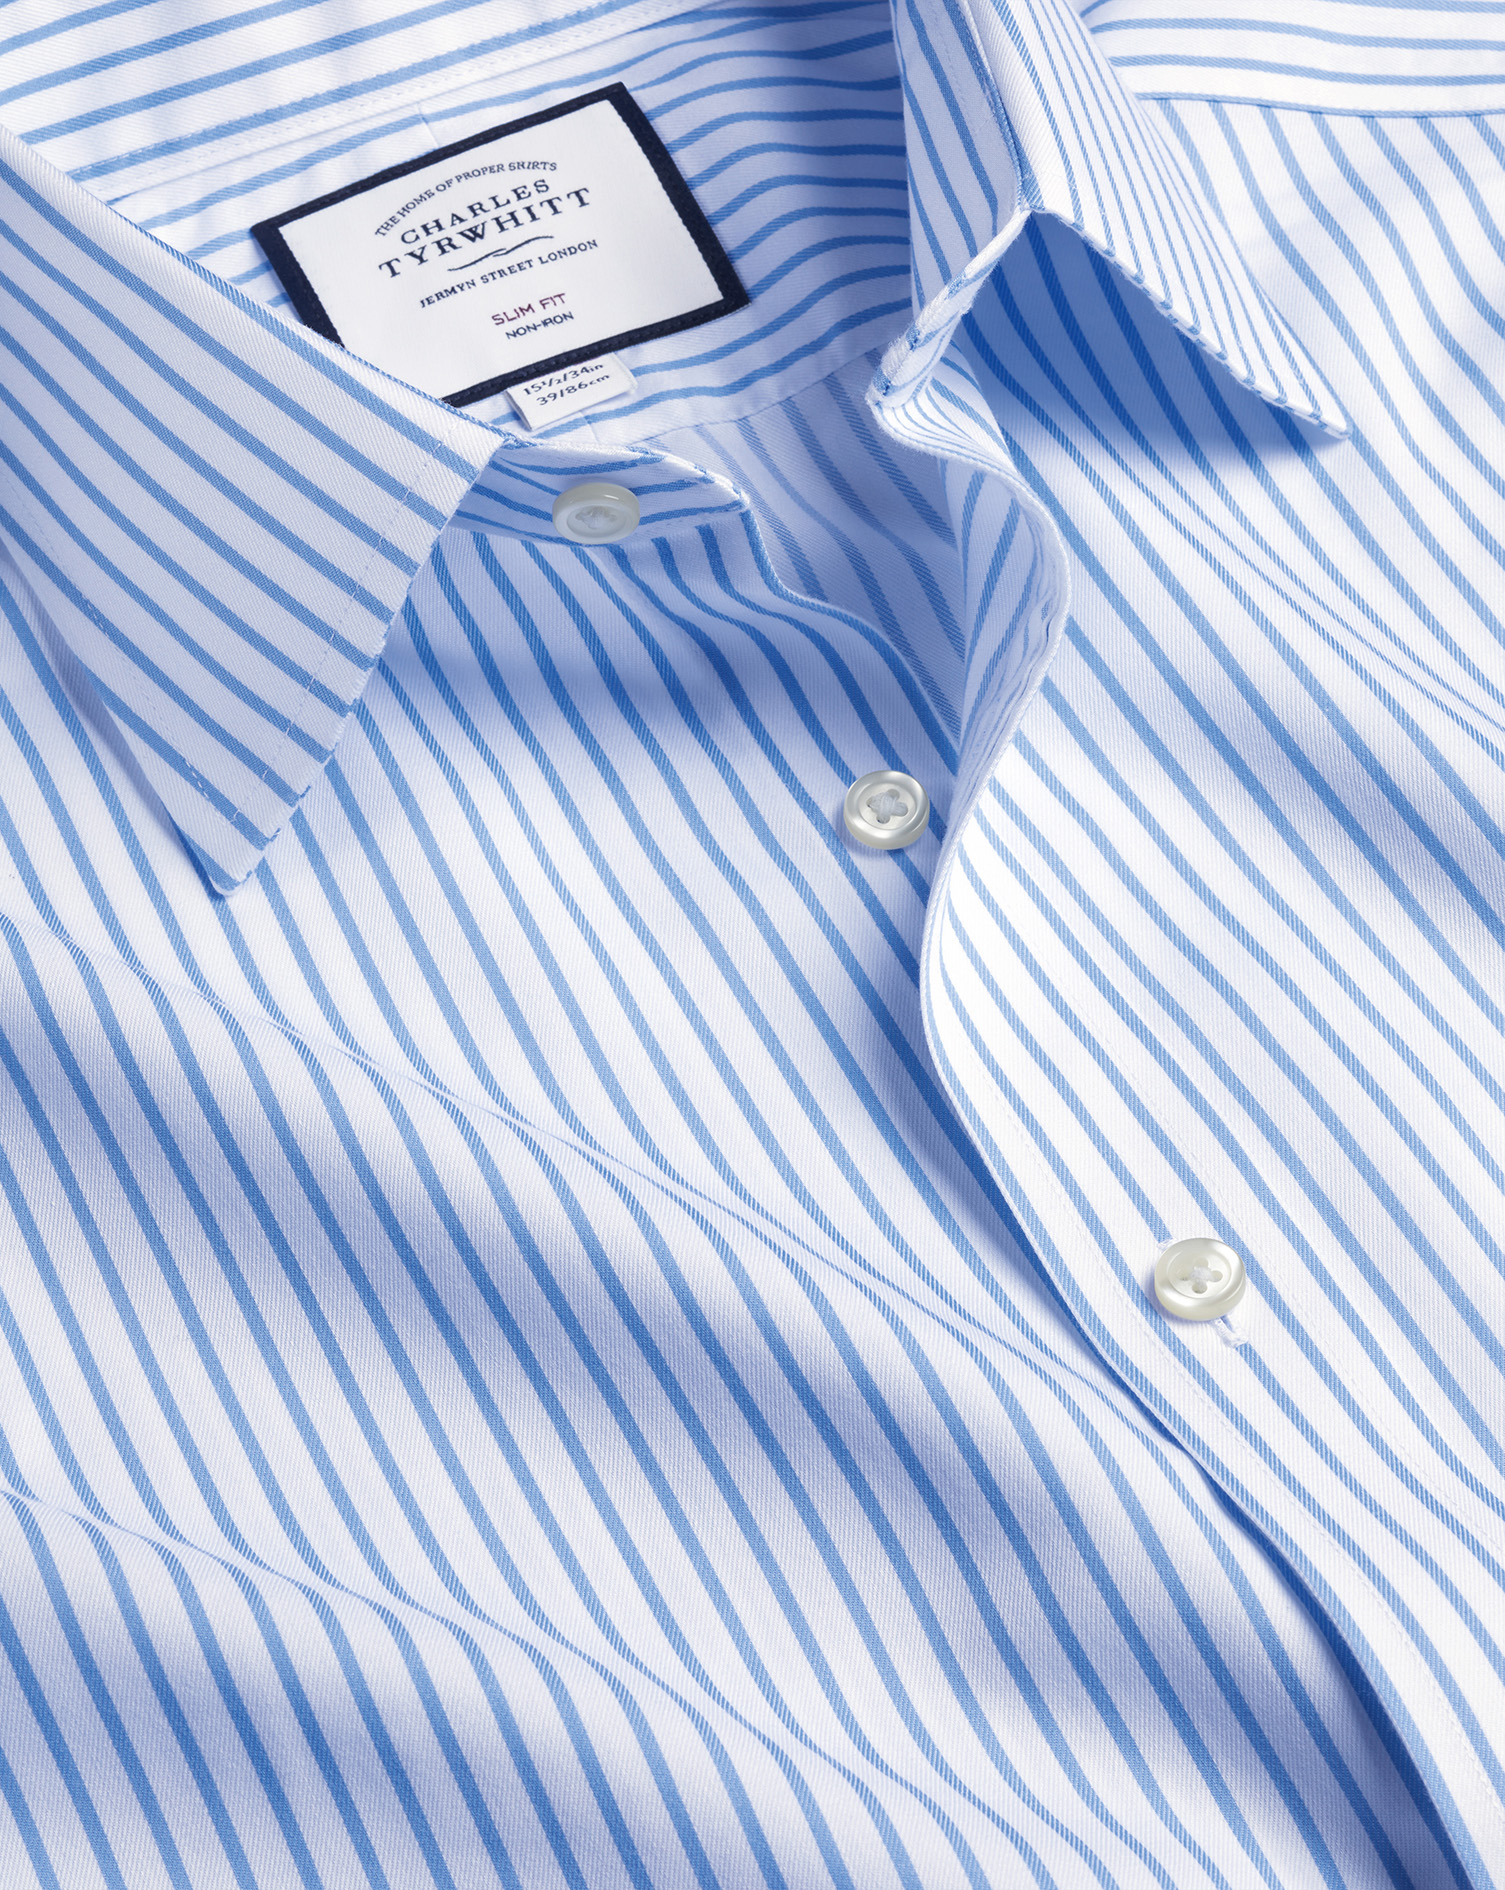 Men's Charles Tyrwhitt Non-Iron Twill Stripe Dress Shirt - Cornflower Blue French Cuff Size XL Cotto